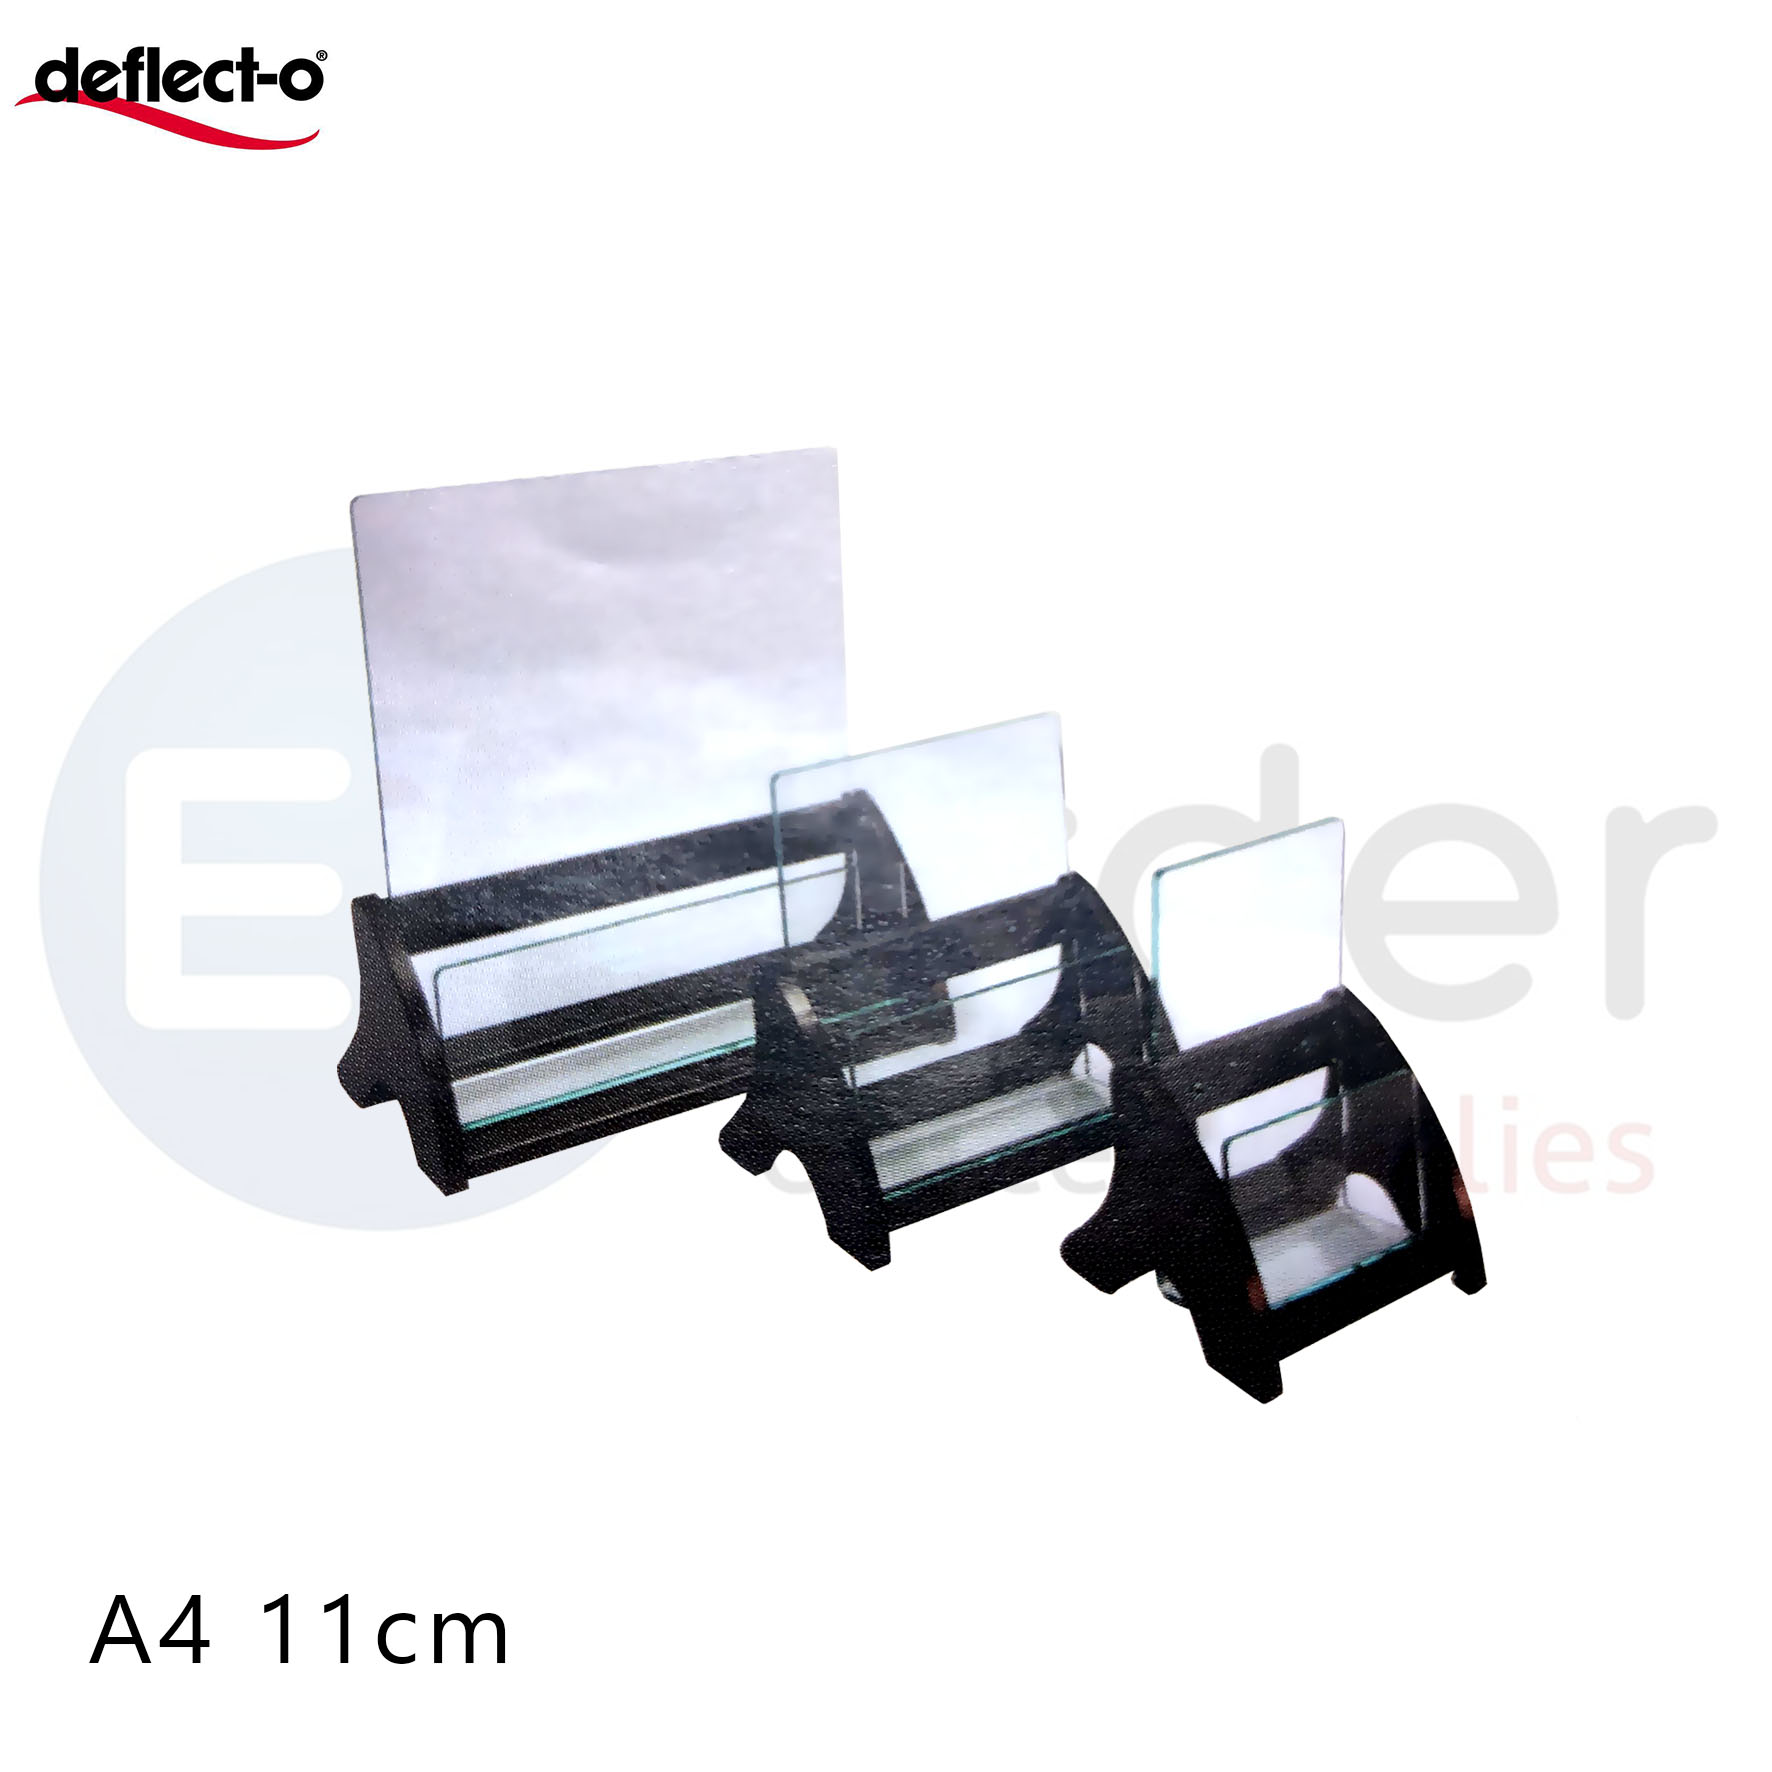 Deflecto wood&acrylicBrochure holder,1/3 A4